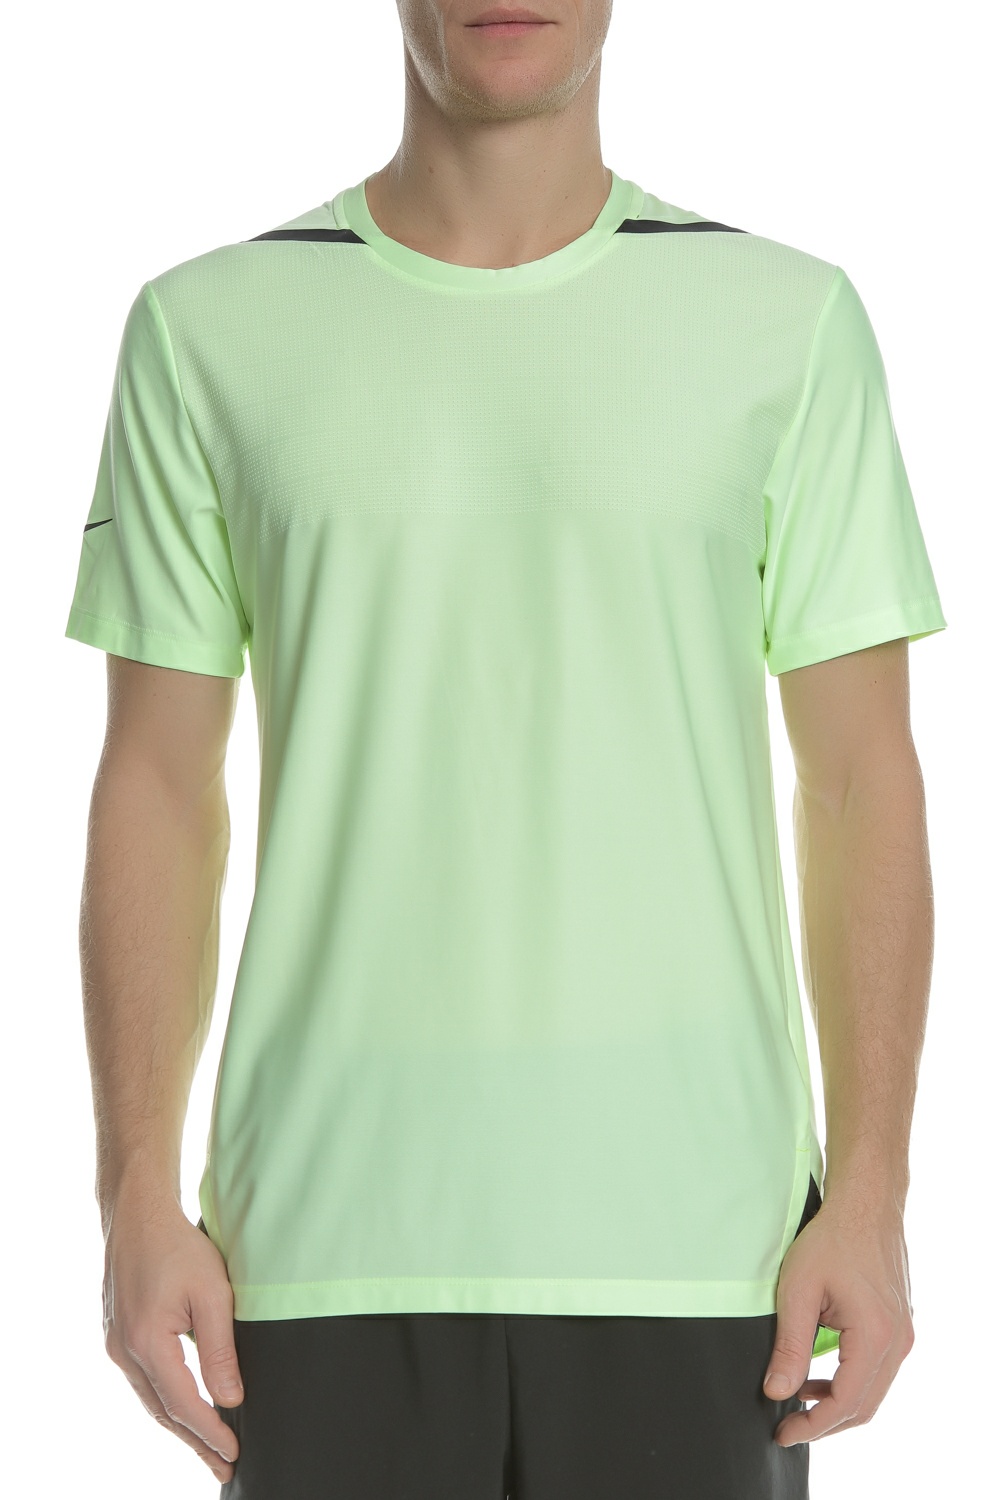 NIKE - Ανδρική κοντομάνικη μπλούζα Nike Dri-FIT Breathe κίτρινη-λαχανί Ανδρικά/Ρούχα/Αθλητικά/T-shirt